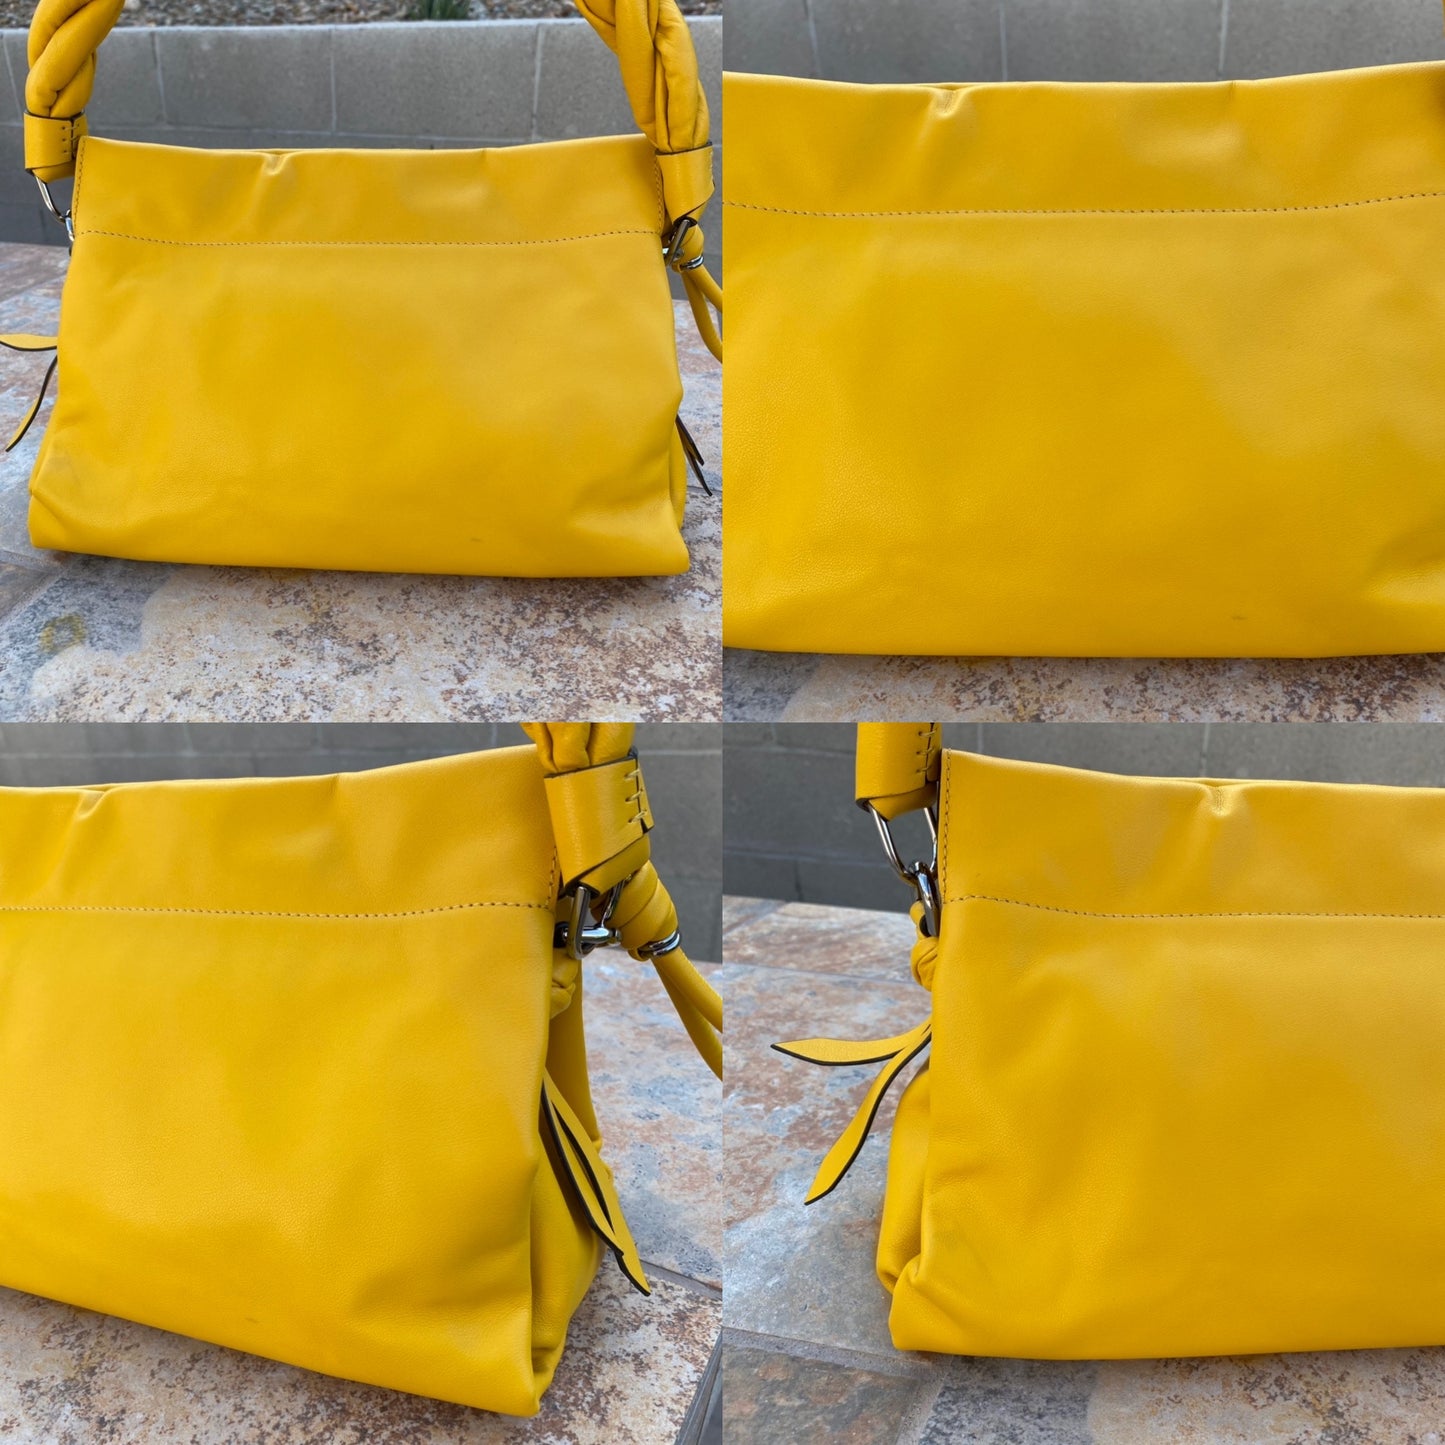 Givenchy ID93 Medium Leather Shoulder Bag